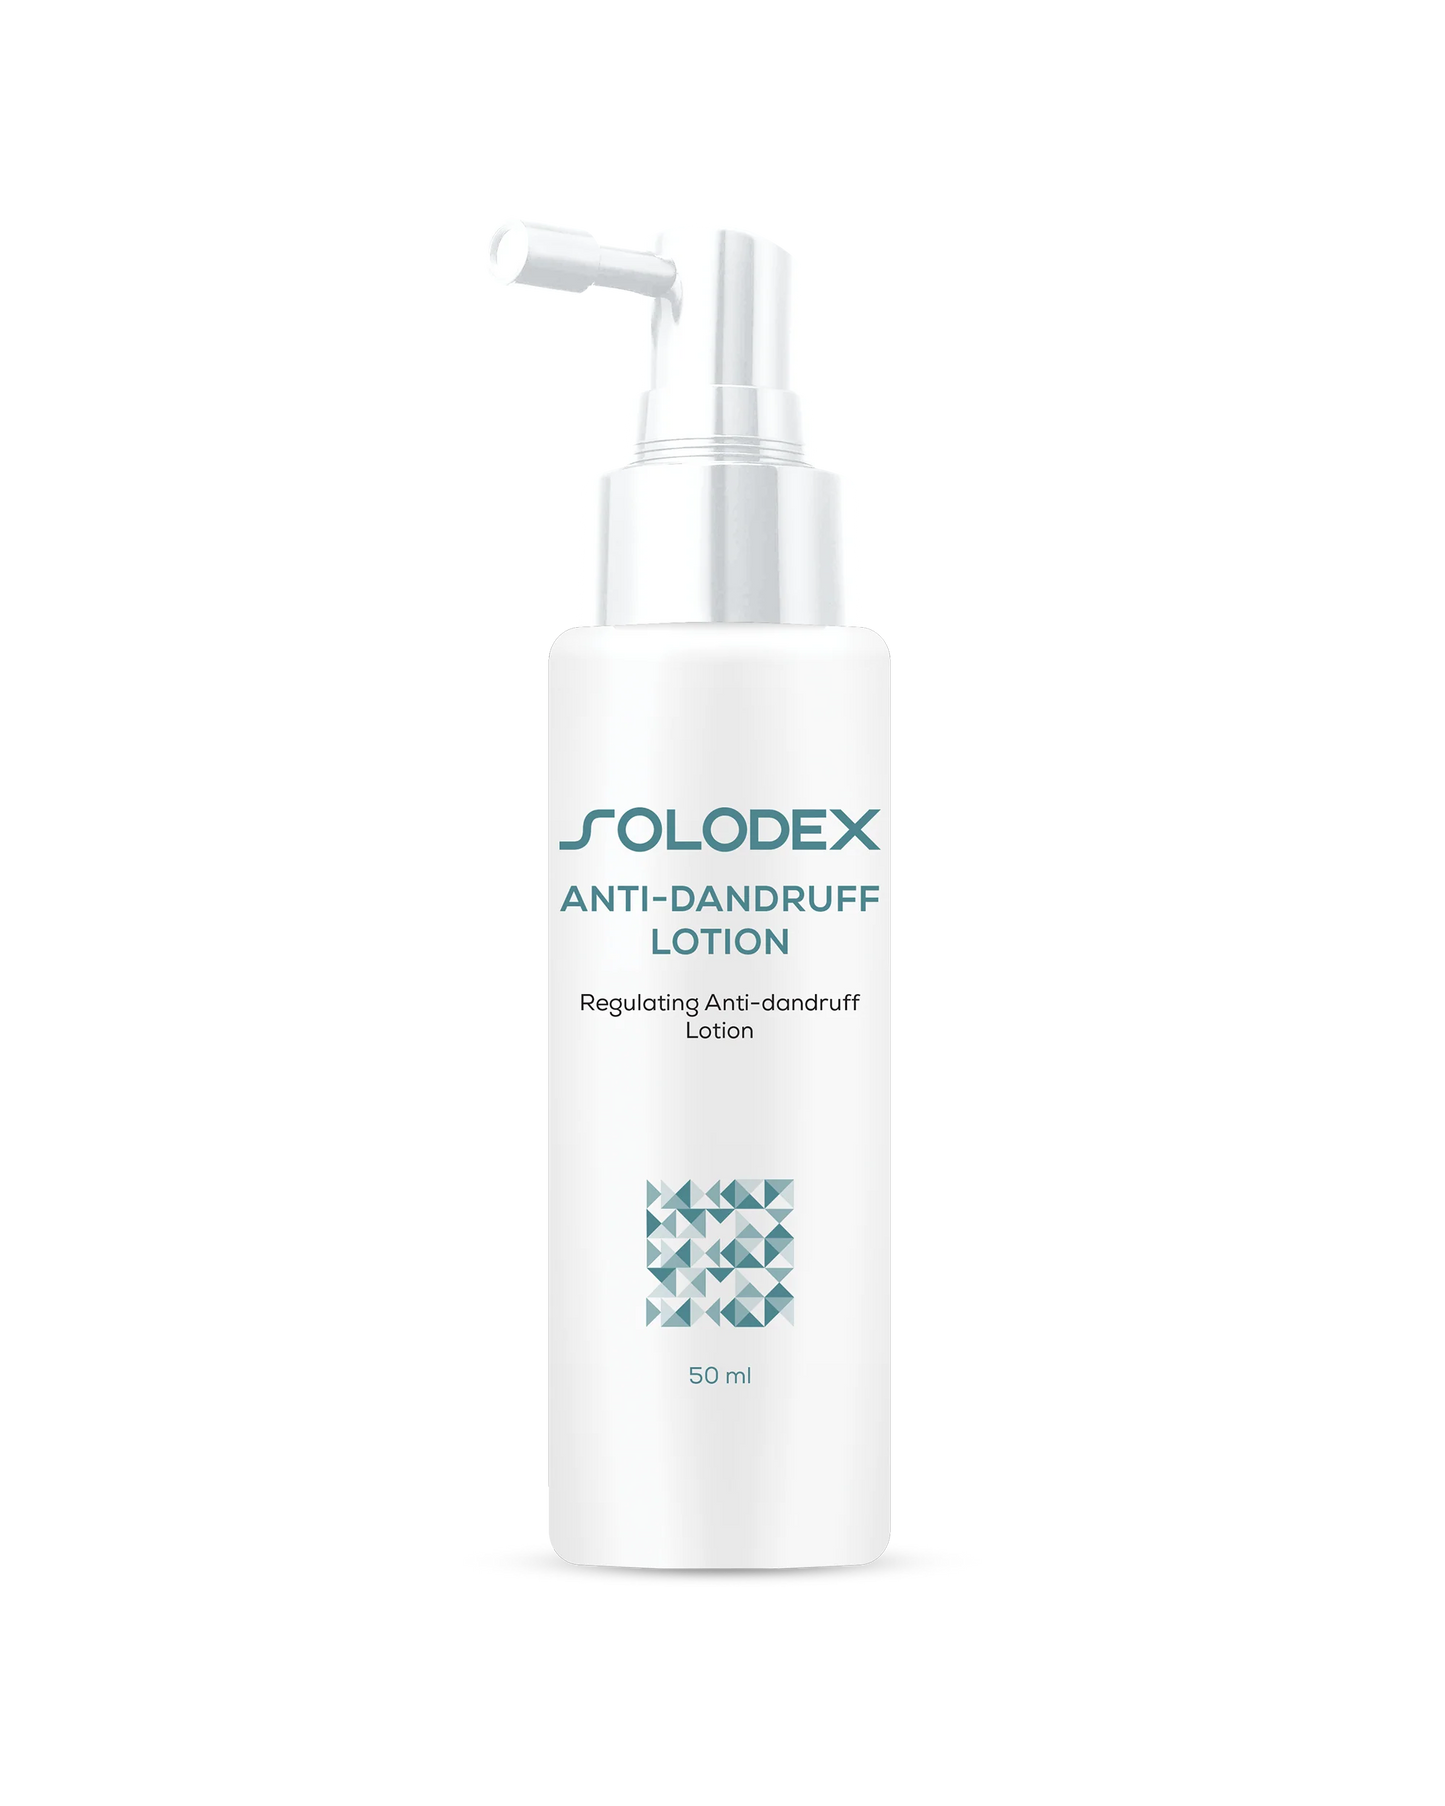 Solodex anti-dandruff lotion,50 ml